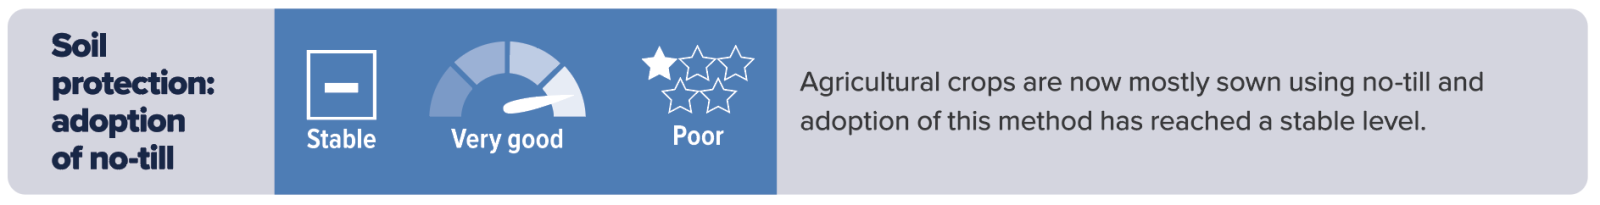 Soil protection adoption of no-till